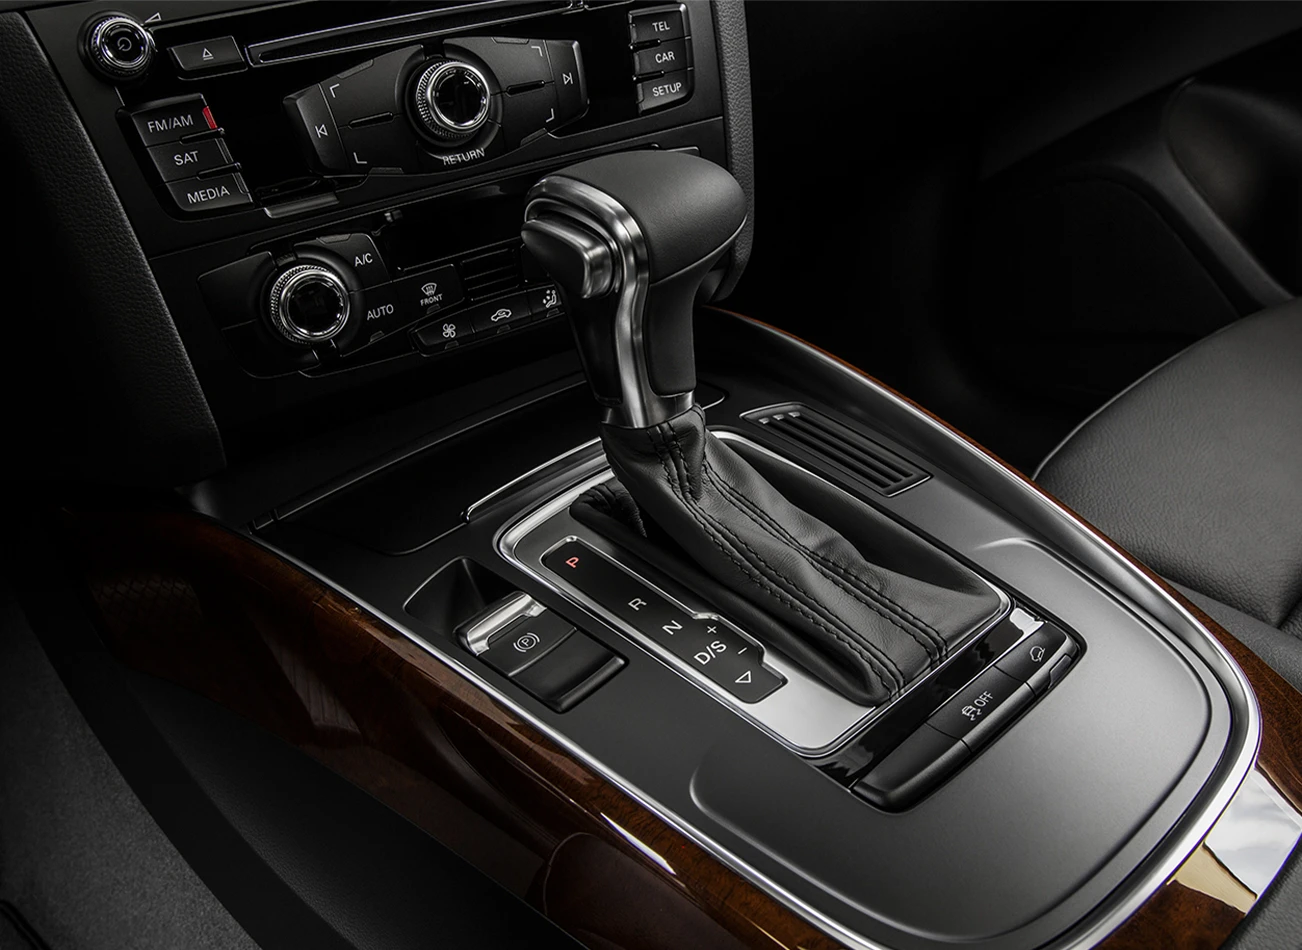 2015 Audi Q5 Review: Reviews, Photos, and More: Reasons to Buy #4 | CarMax